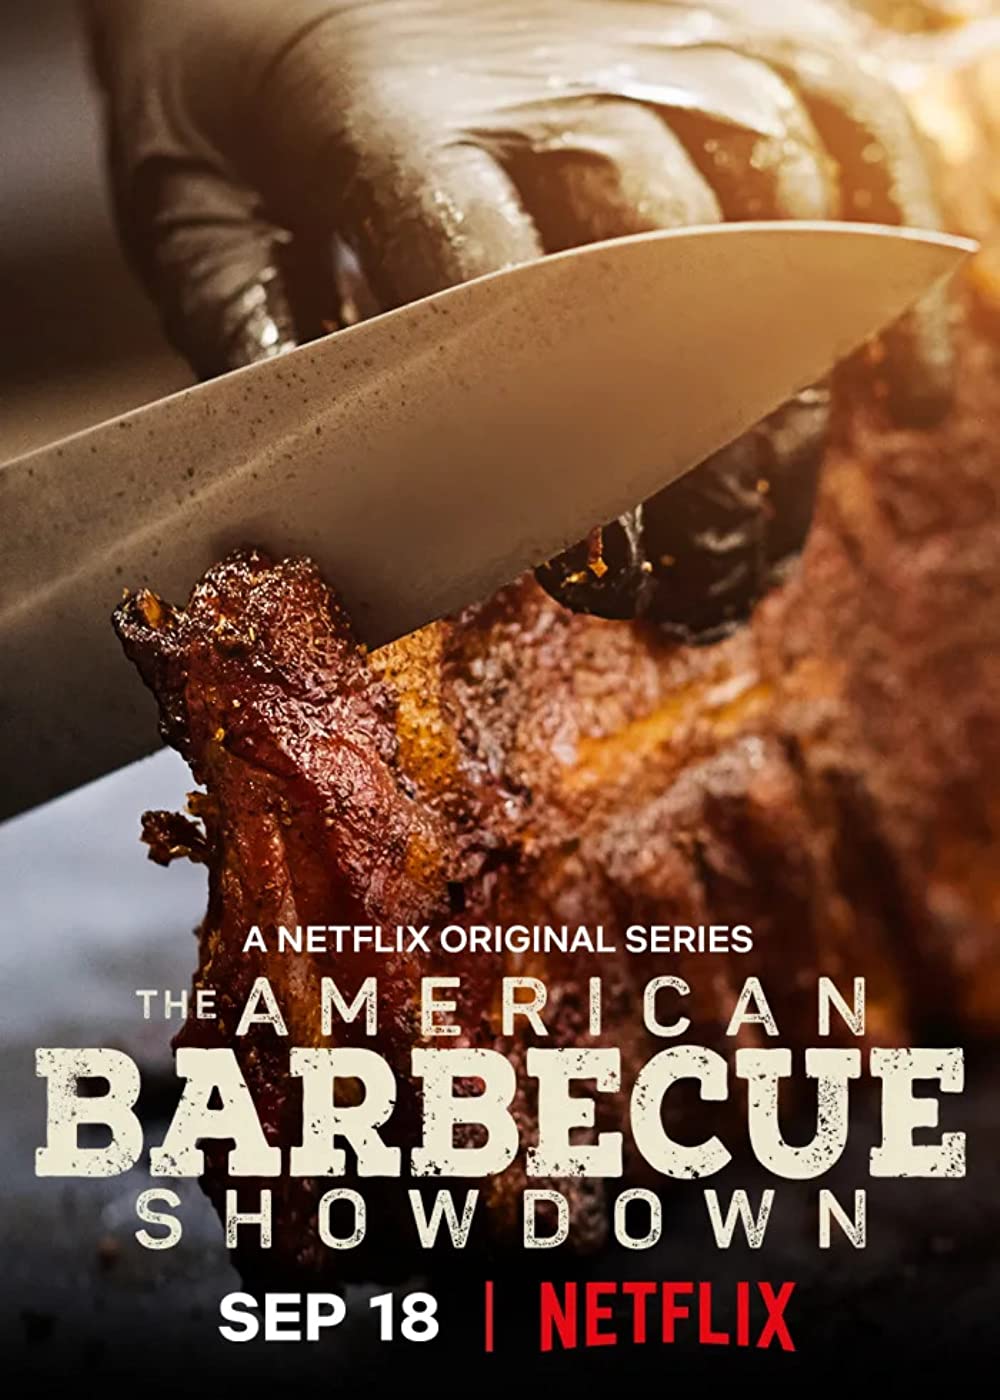 Filmbeschreibung zu American Barbecue Showdown